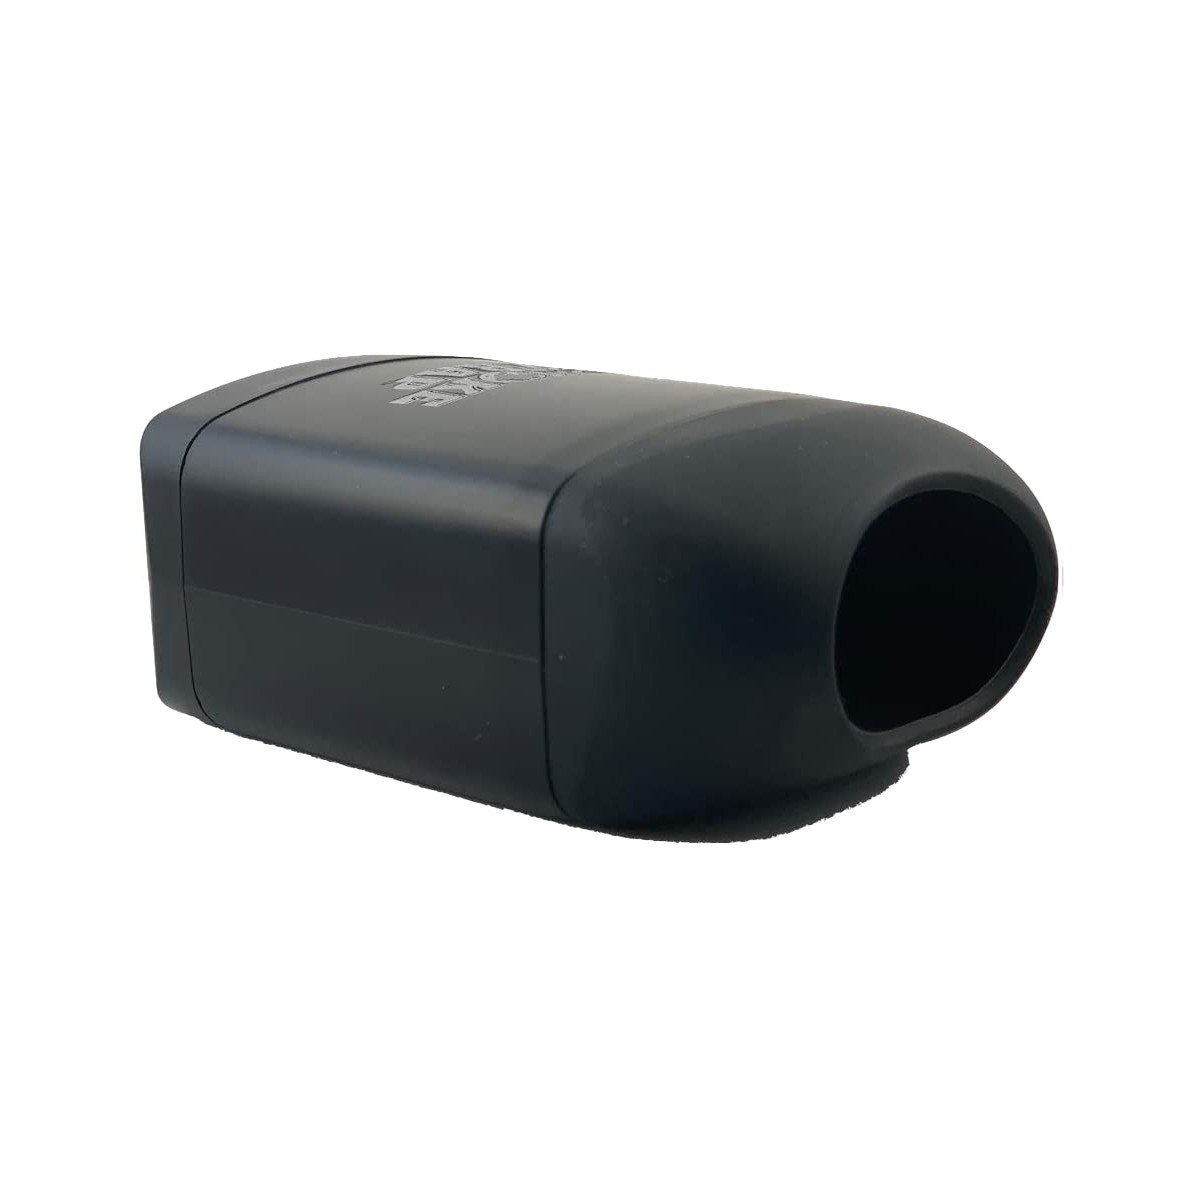 Smoke Trap 2.0 Original Personal Air Filter – Discreet Smoker